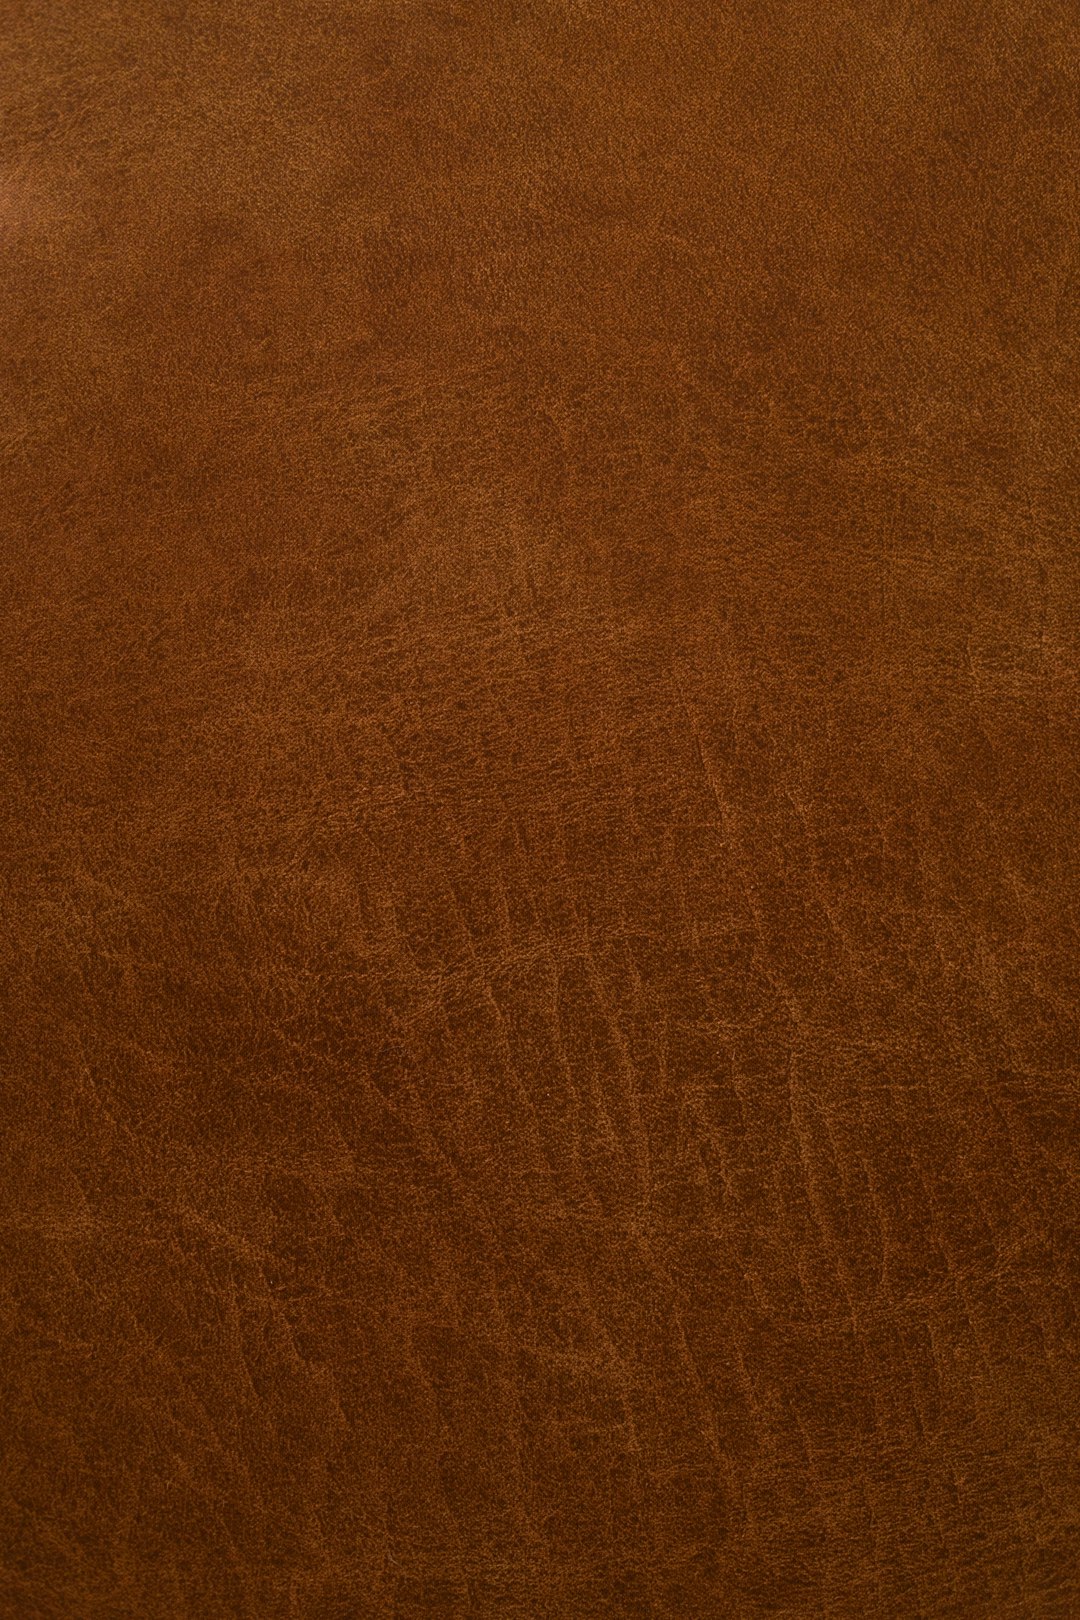 ebony soil, texture, brown leather